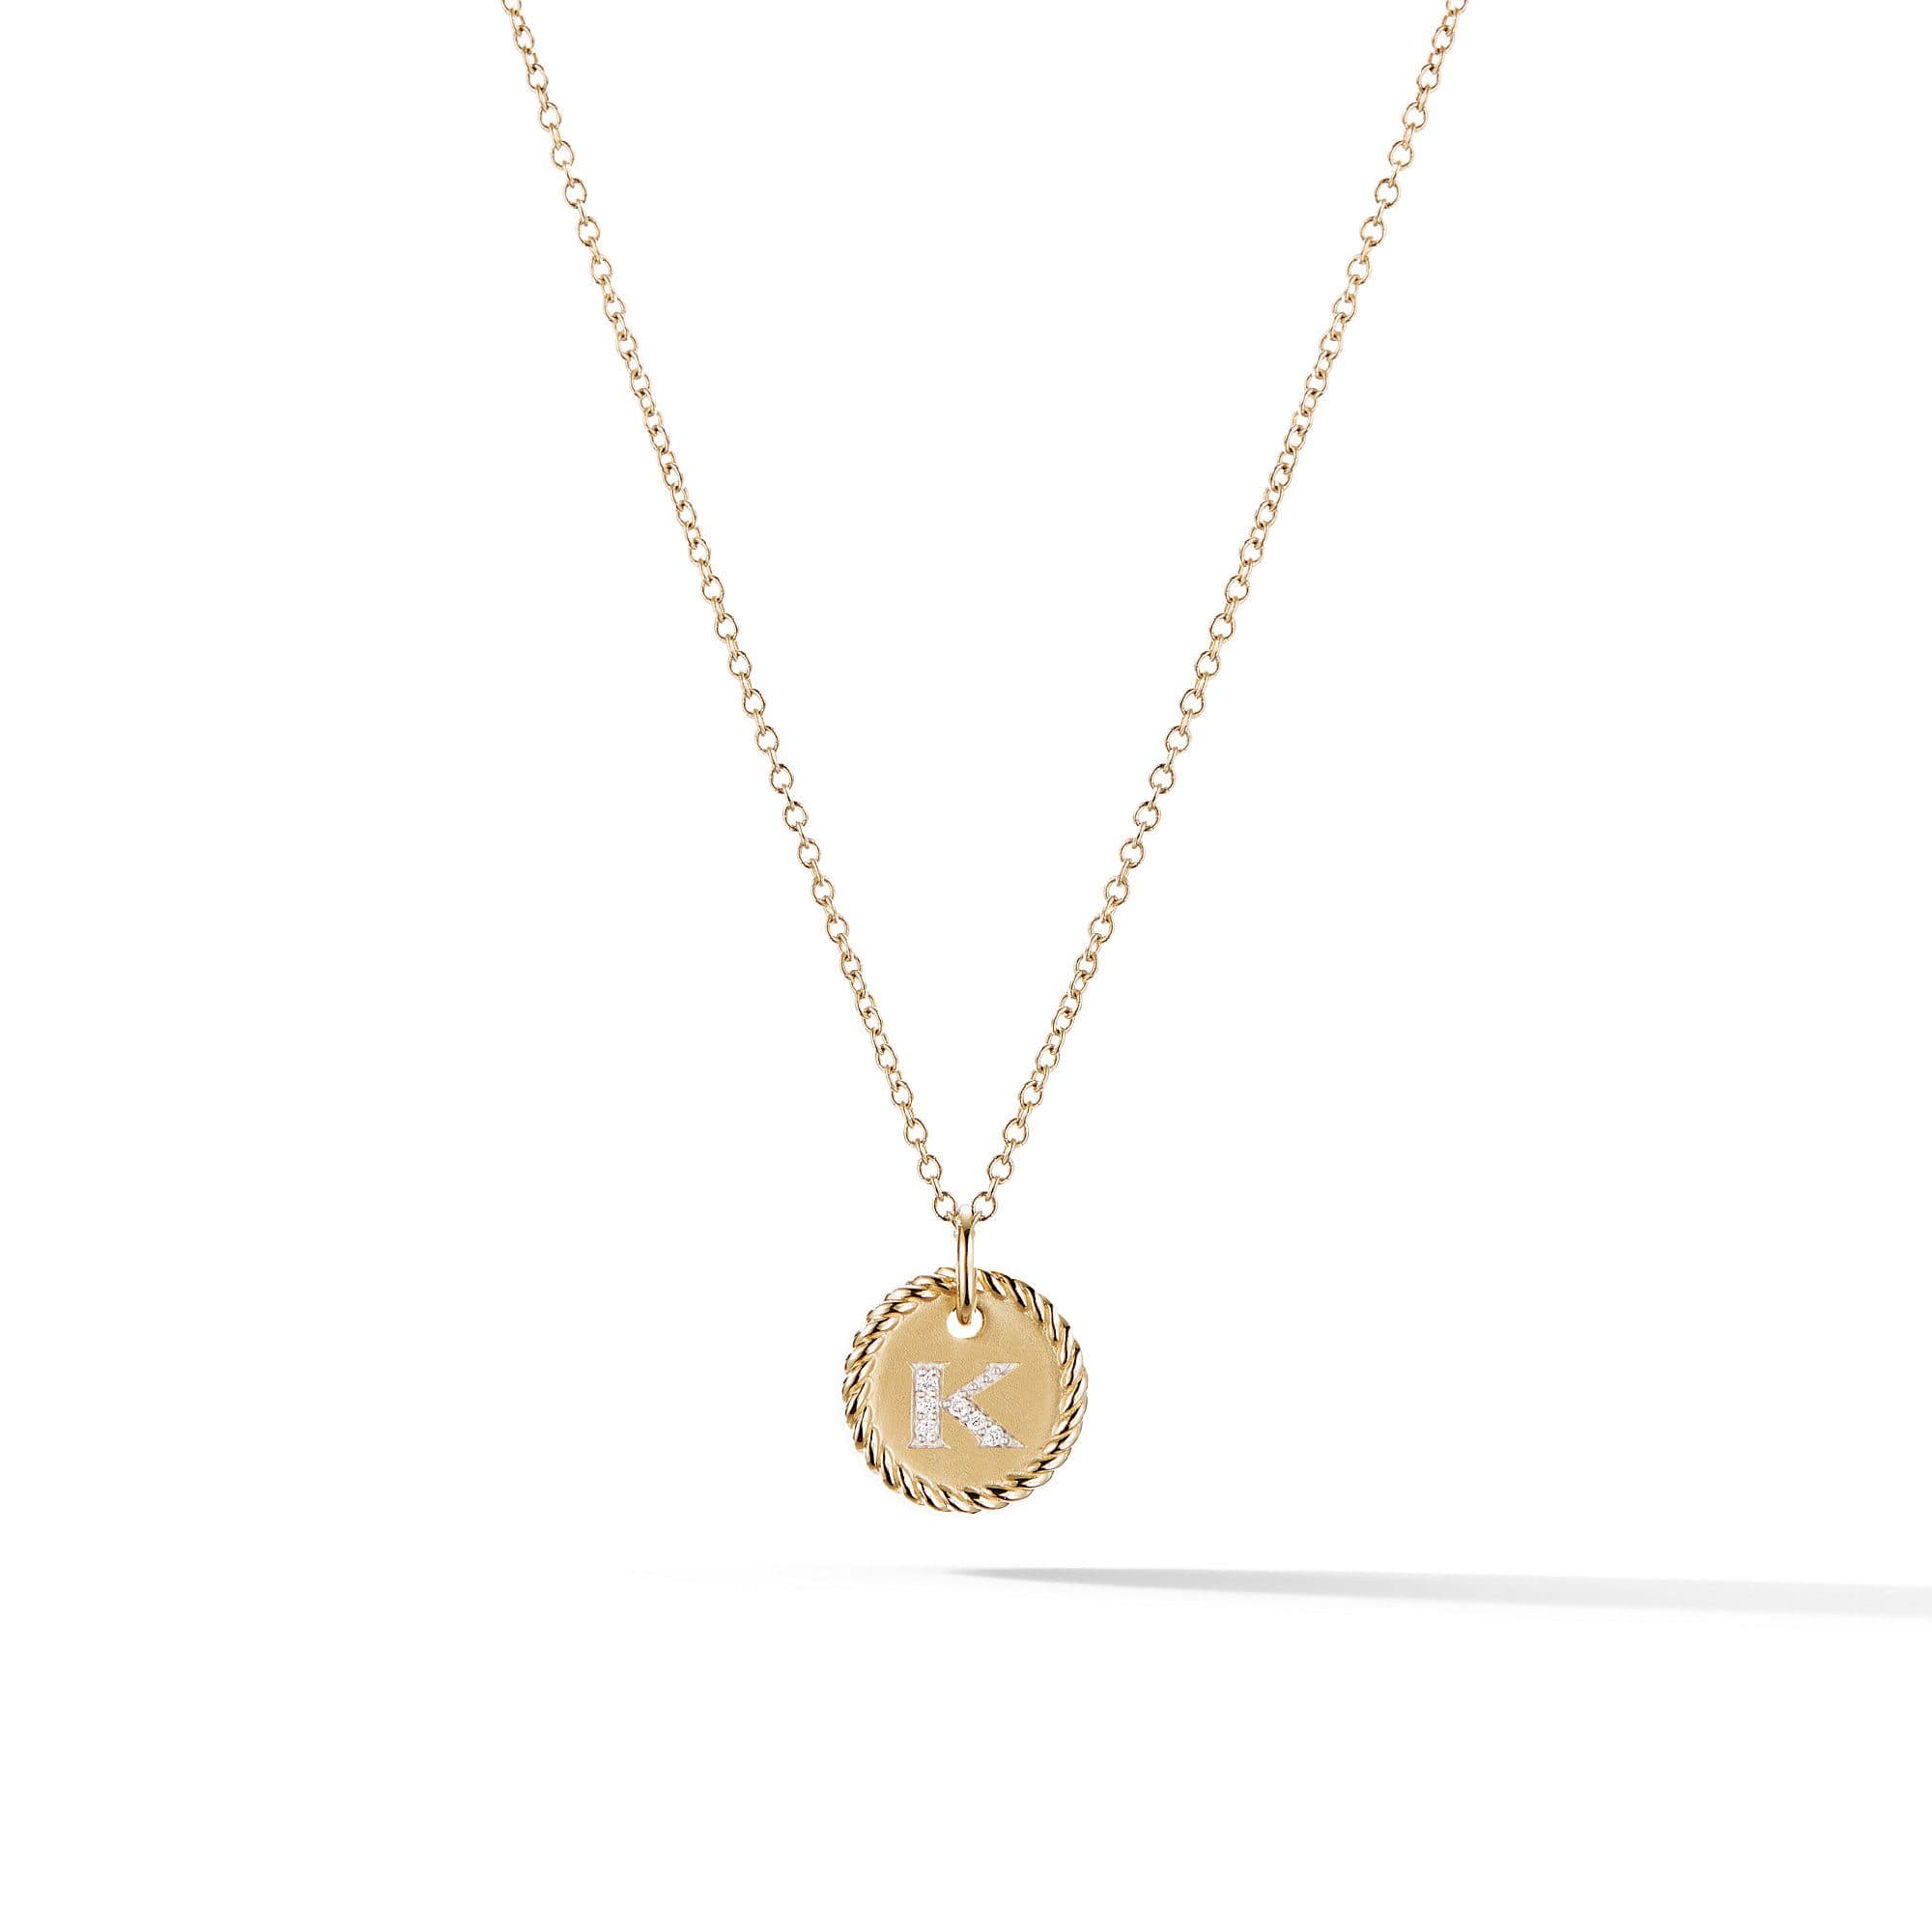 David Yurman K Initial Charm Necklace in 18k Yellow Gold with Diamonds